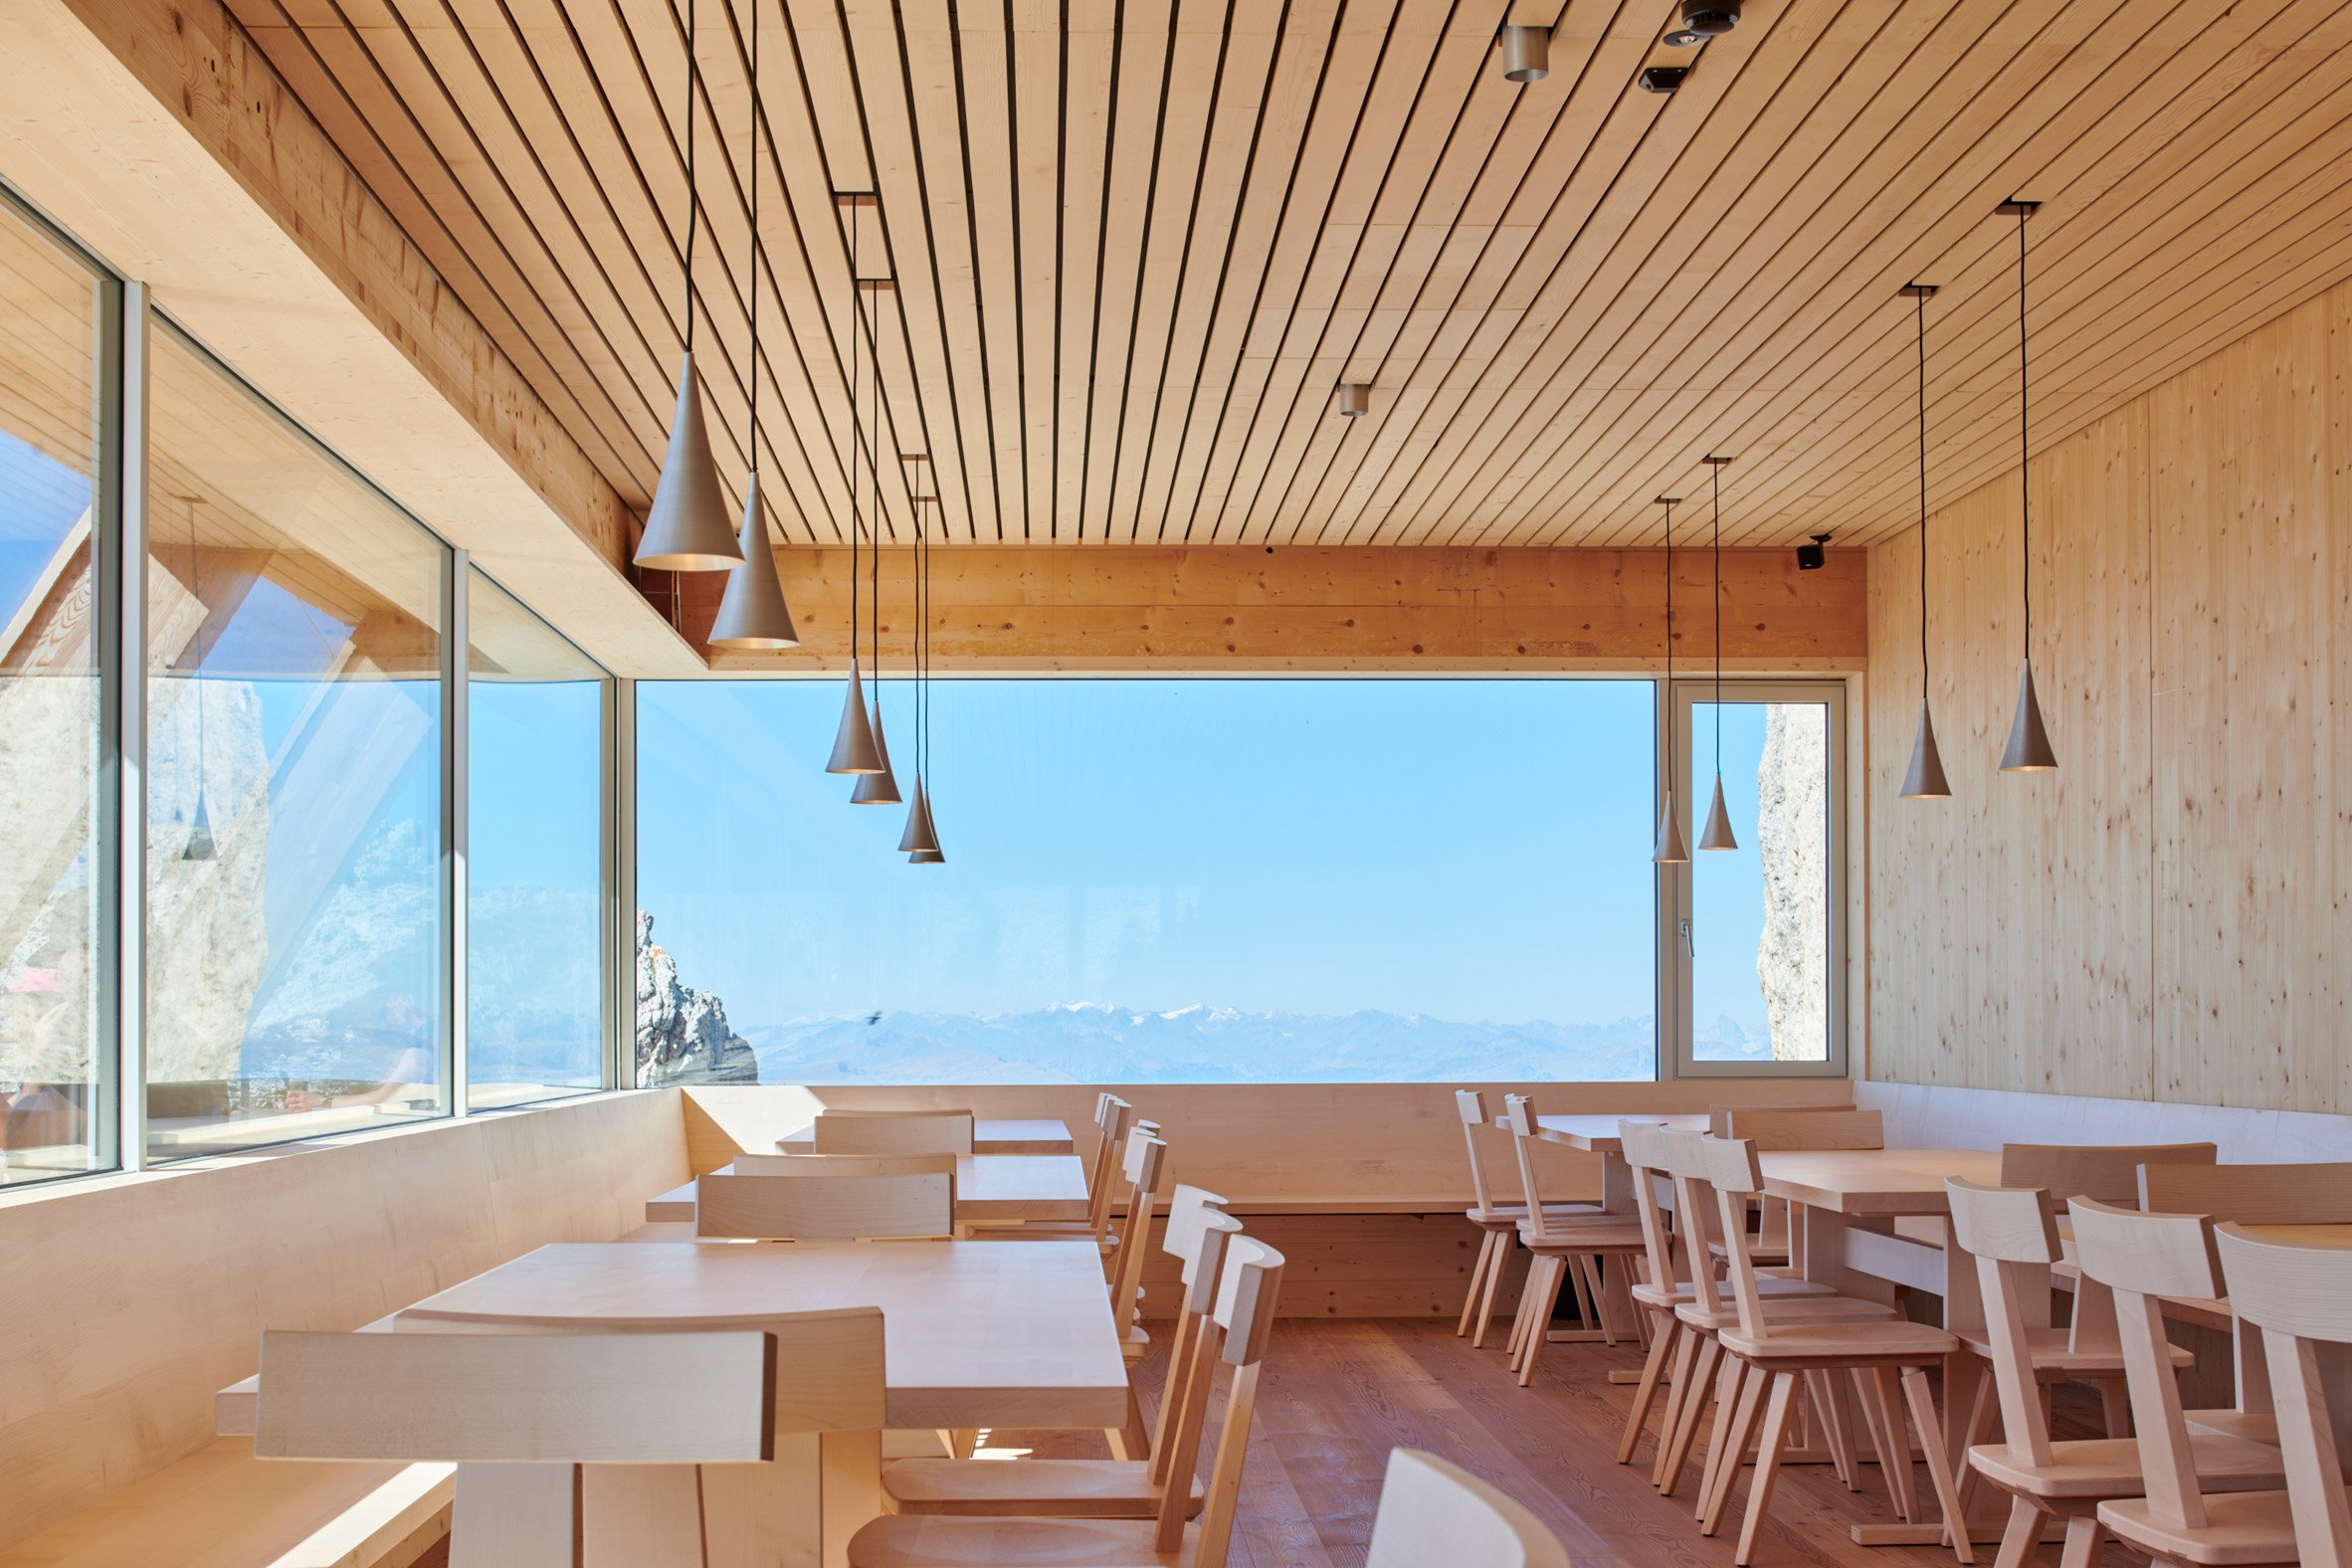 Bar and restaurant interior at mountain refuge by Senoner Tammerle Architekten